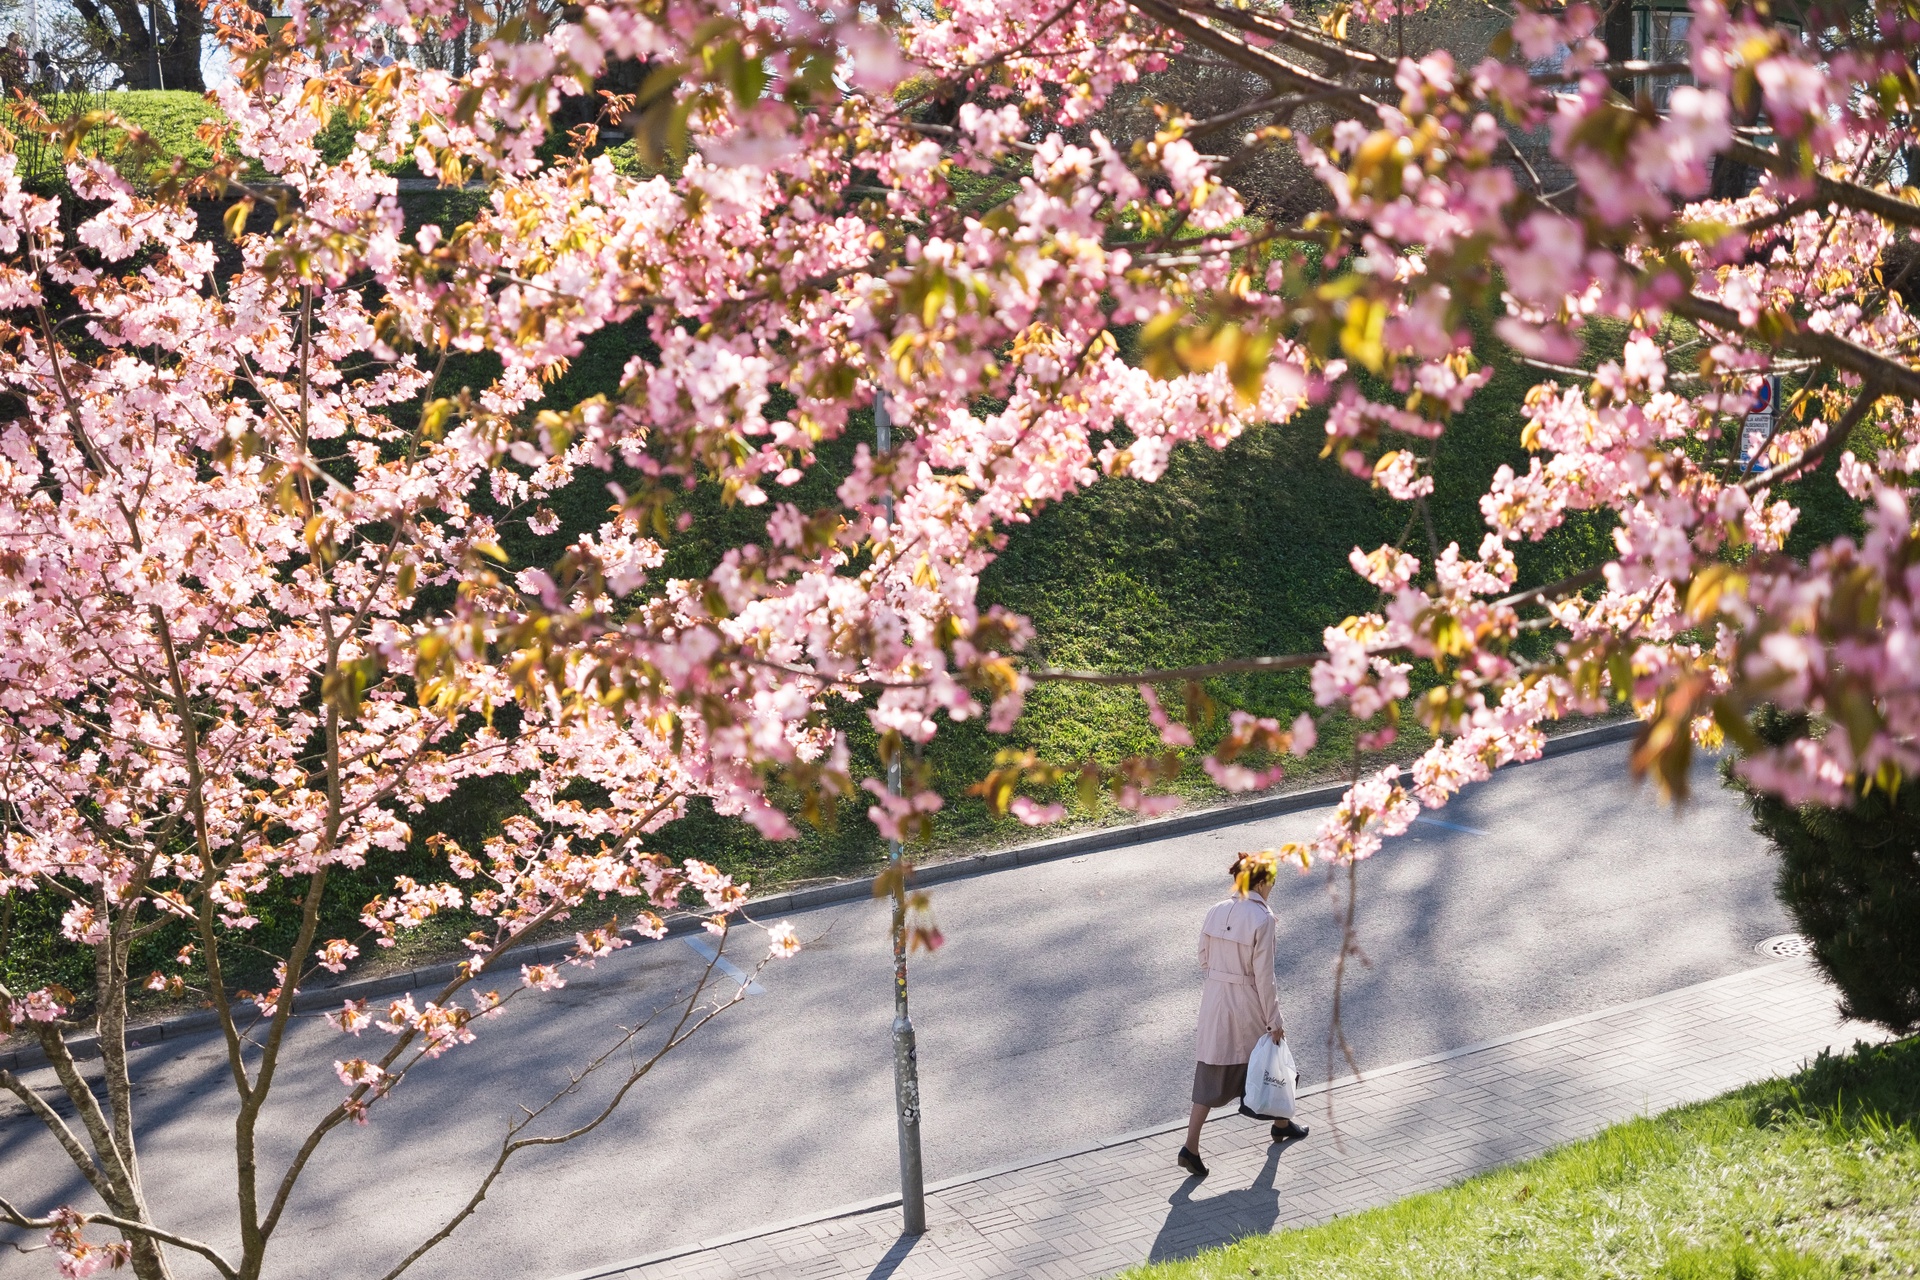 Cherry blossoms blooming in Tallinn, Estonia, in springtime